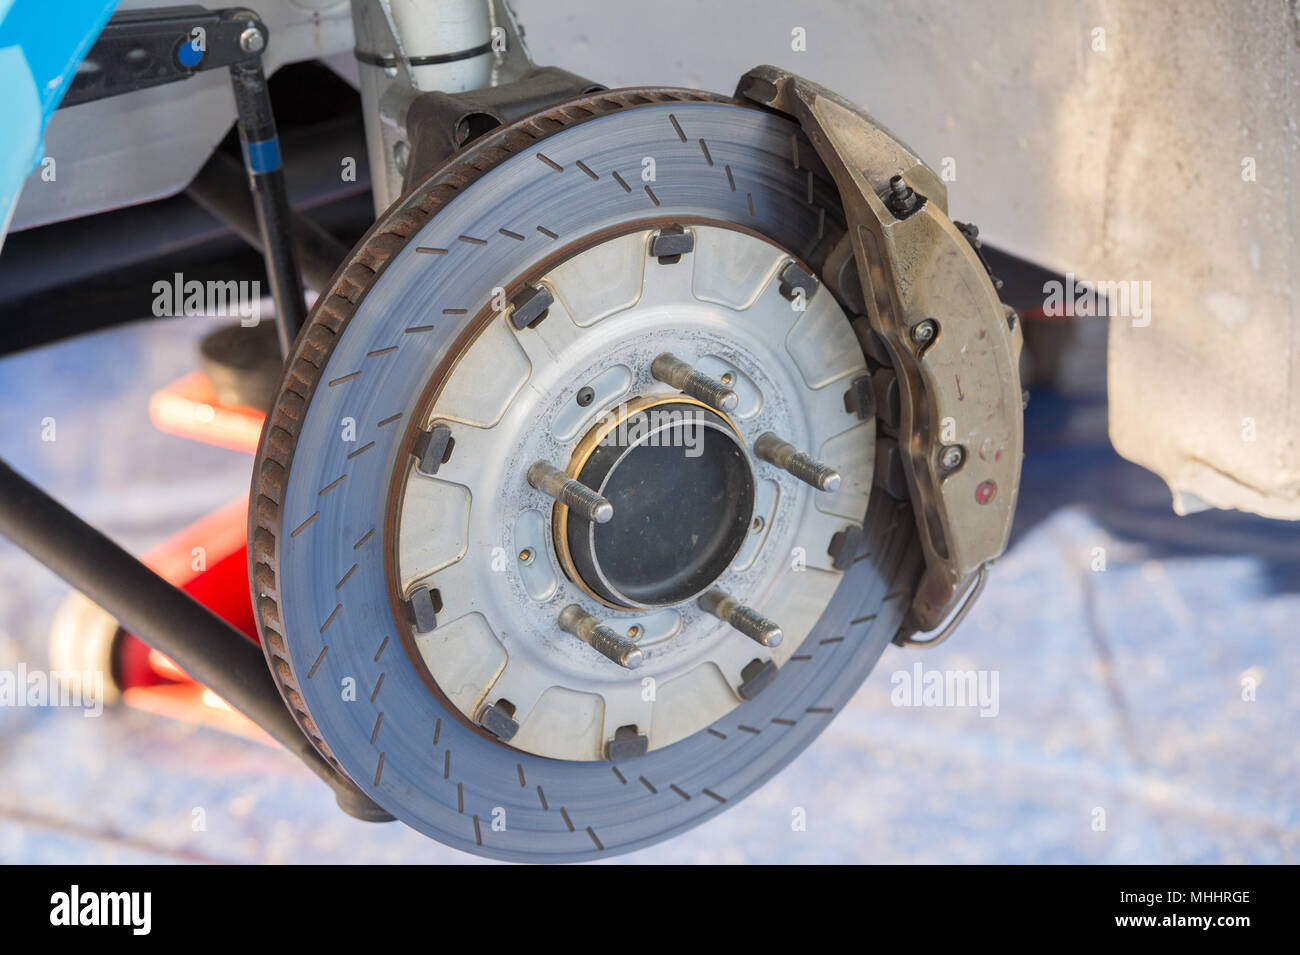 Rally race car brake system detail close up Stock Photo - Alamy